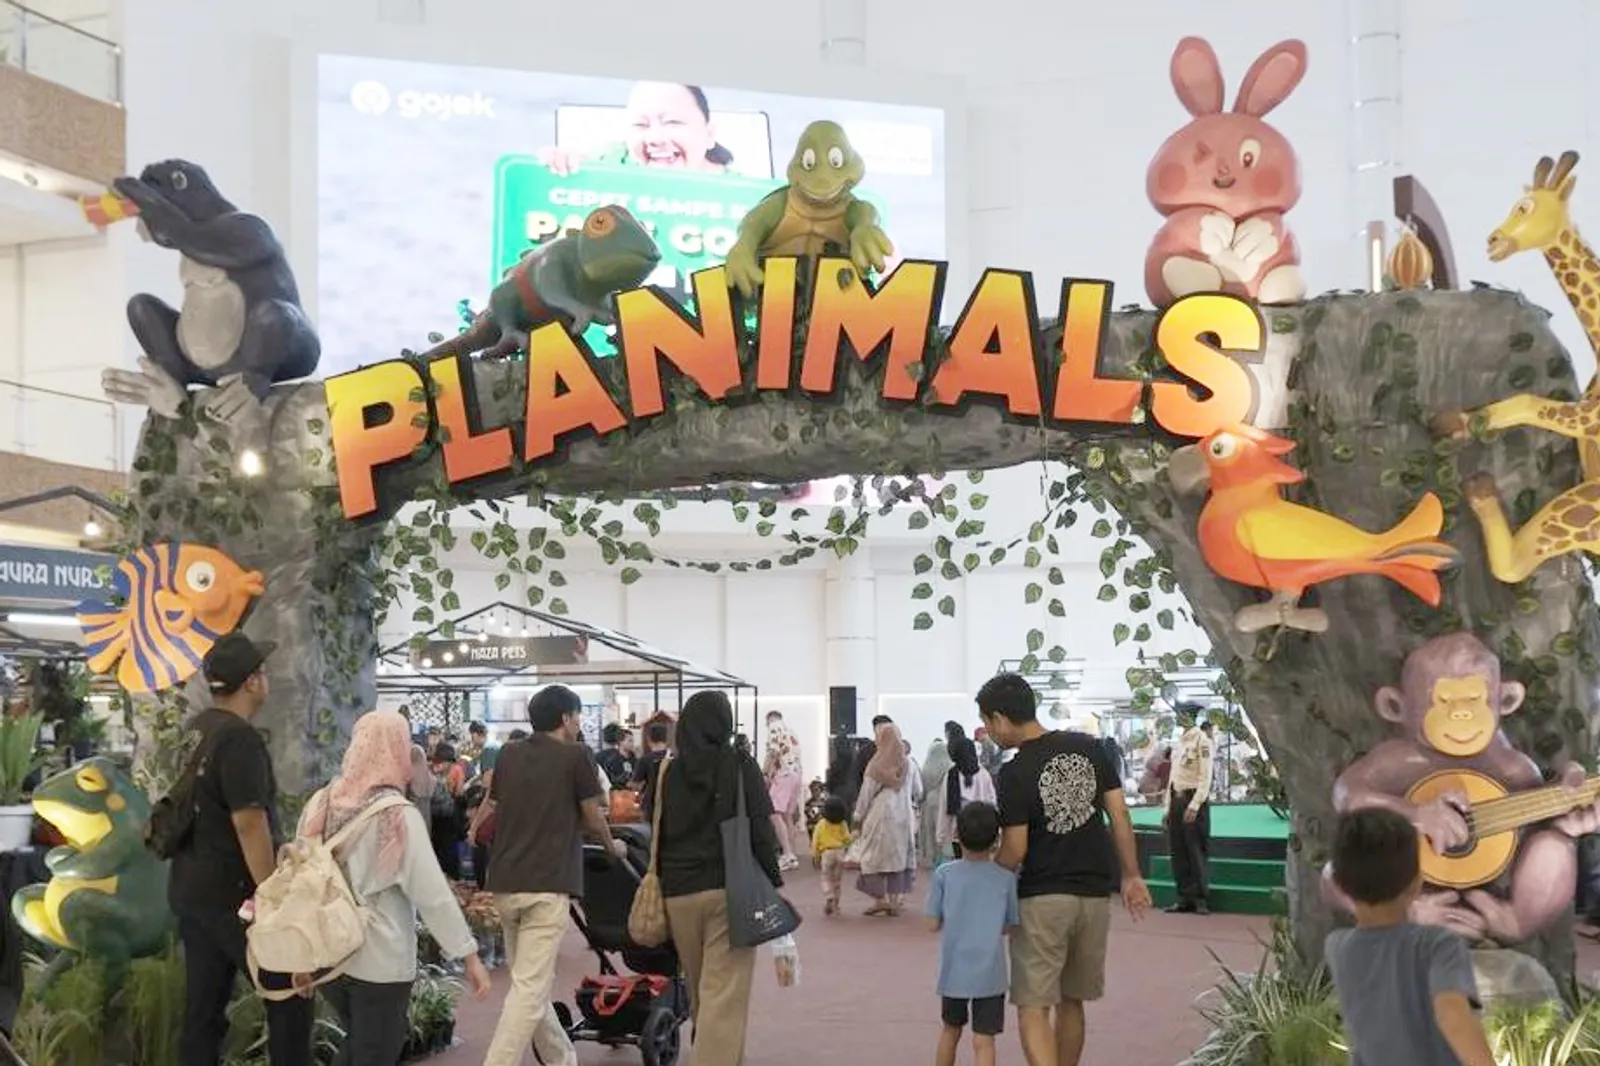 Planimals Exhibition & Zoonimals, Hiburan Seru di Musim Liburan